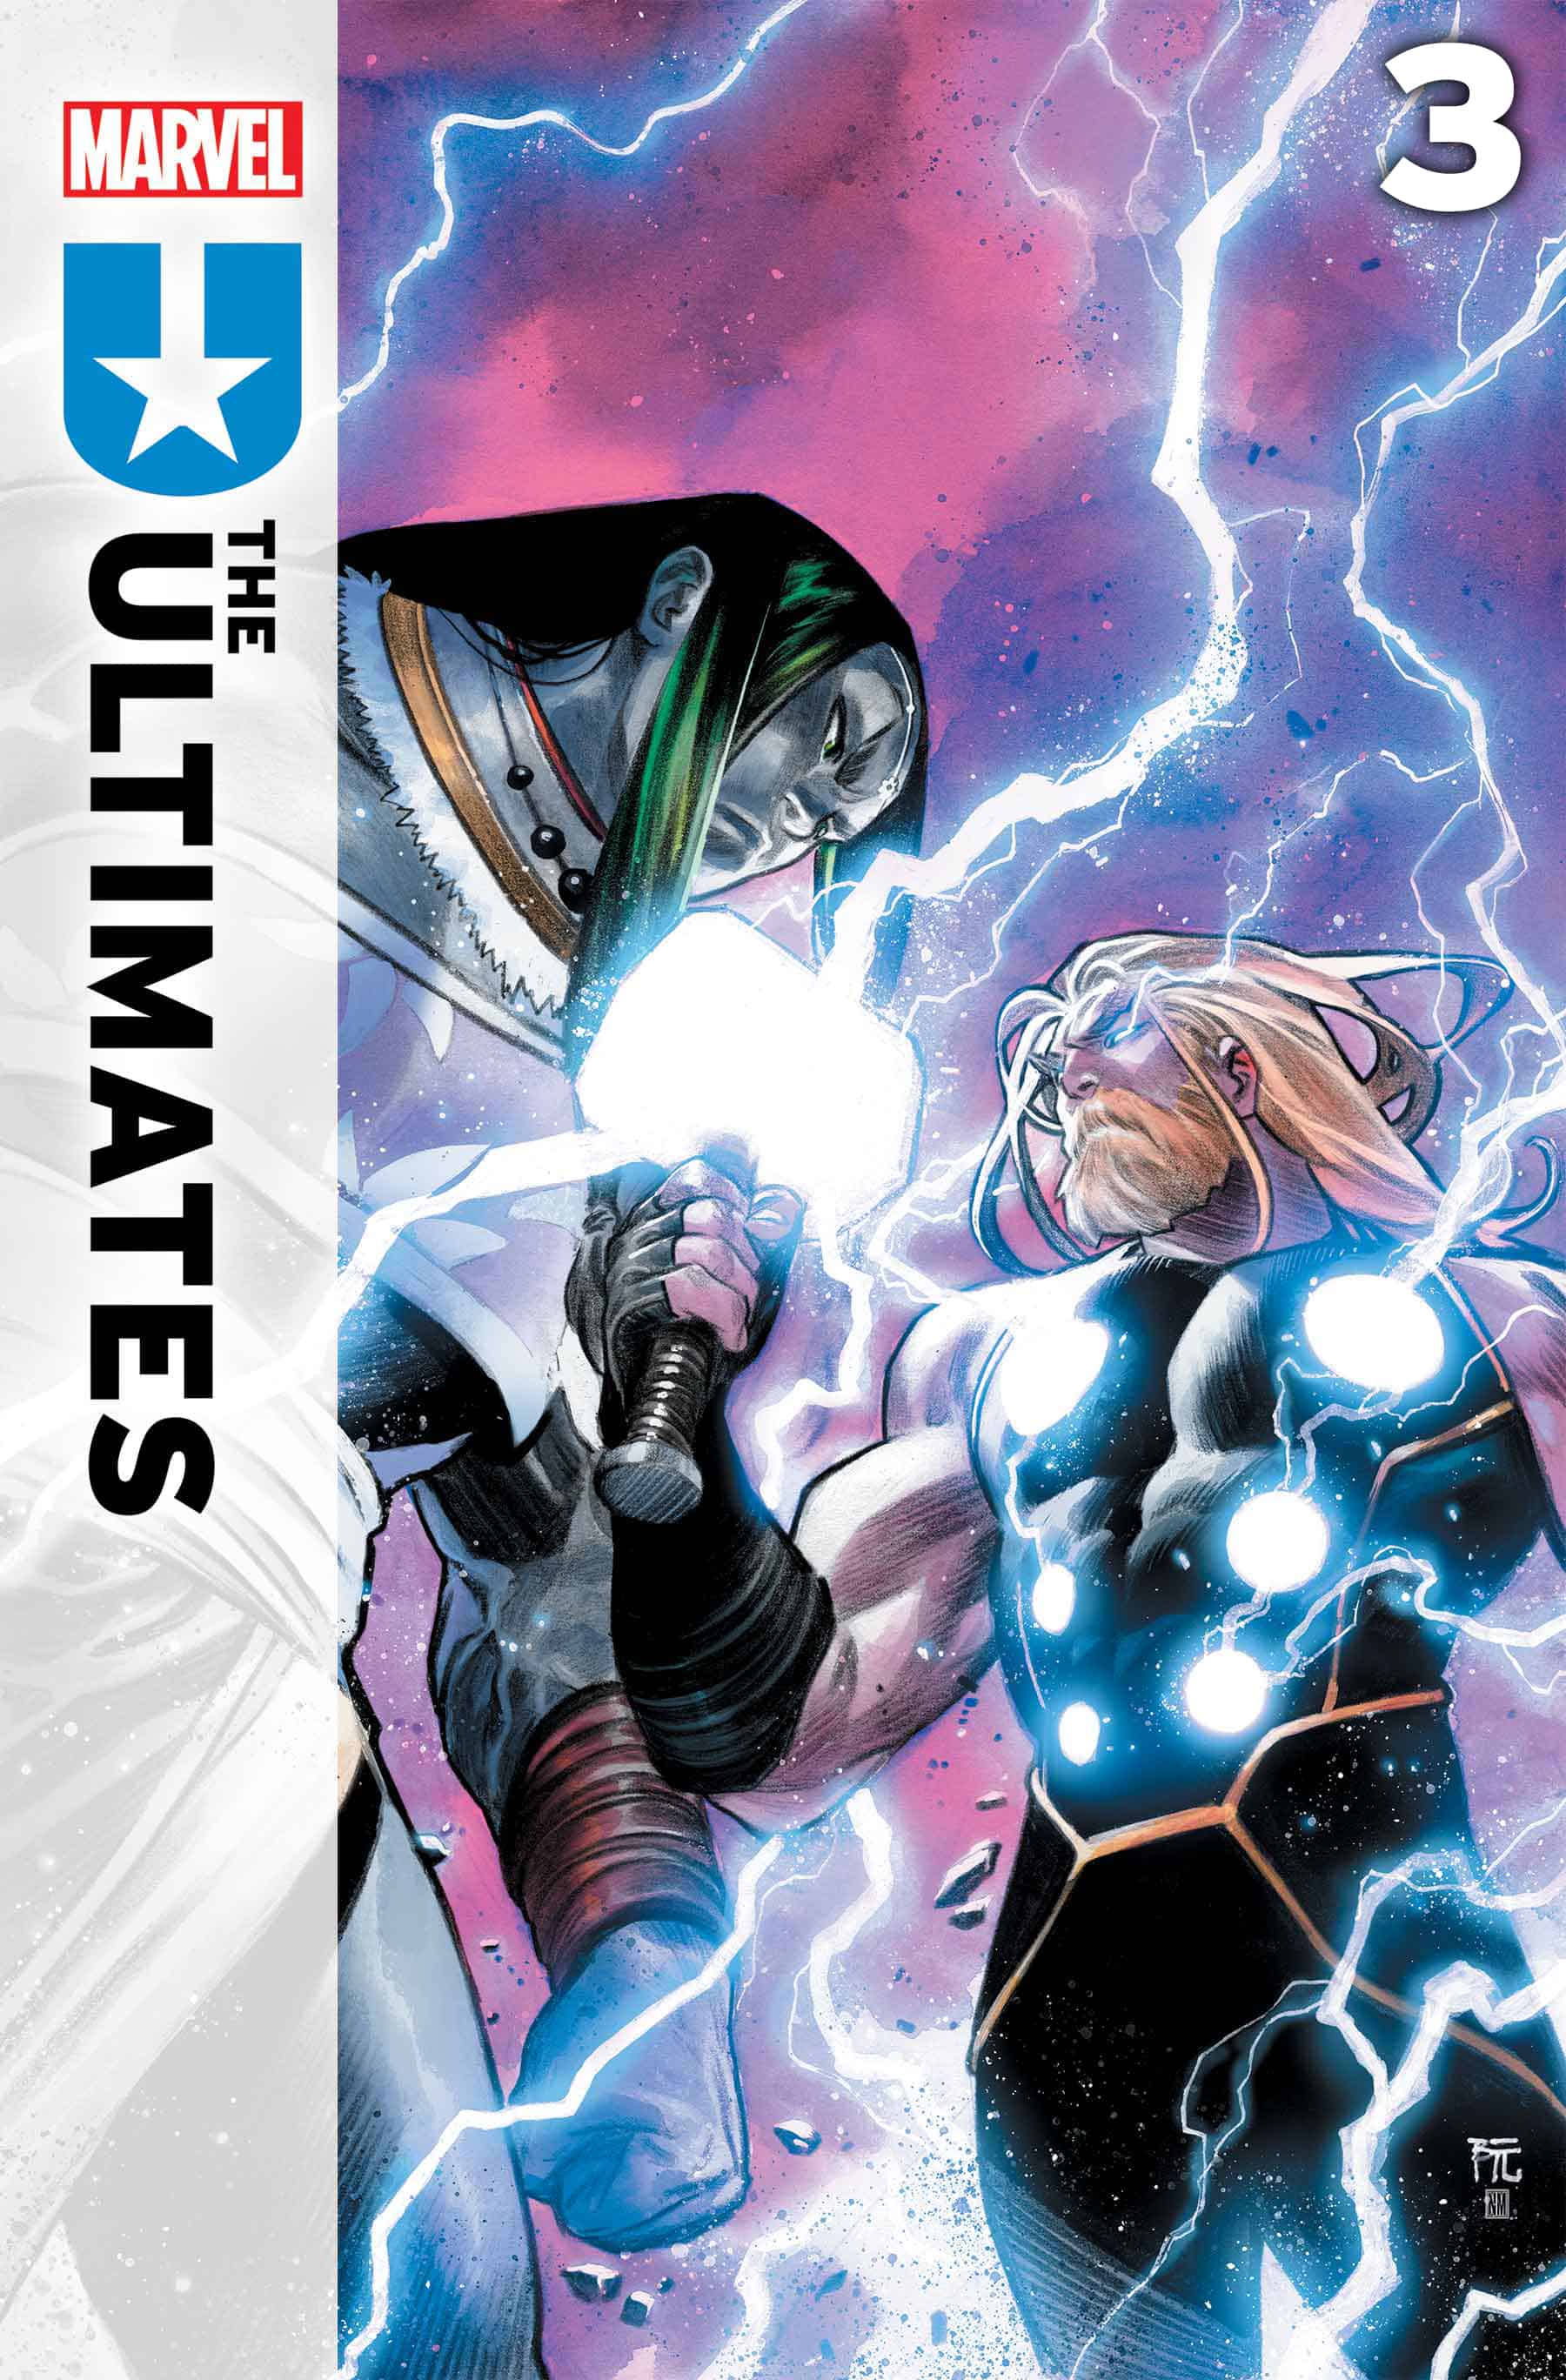 Thor battles Doom in Ultimates #3